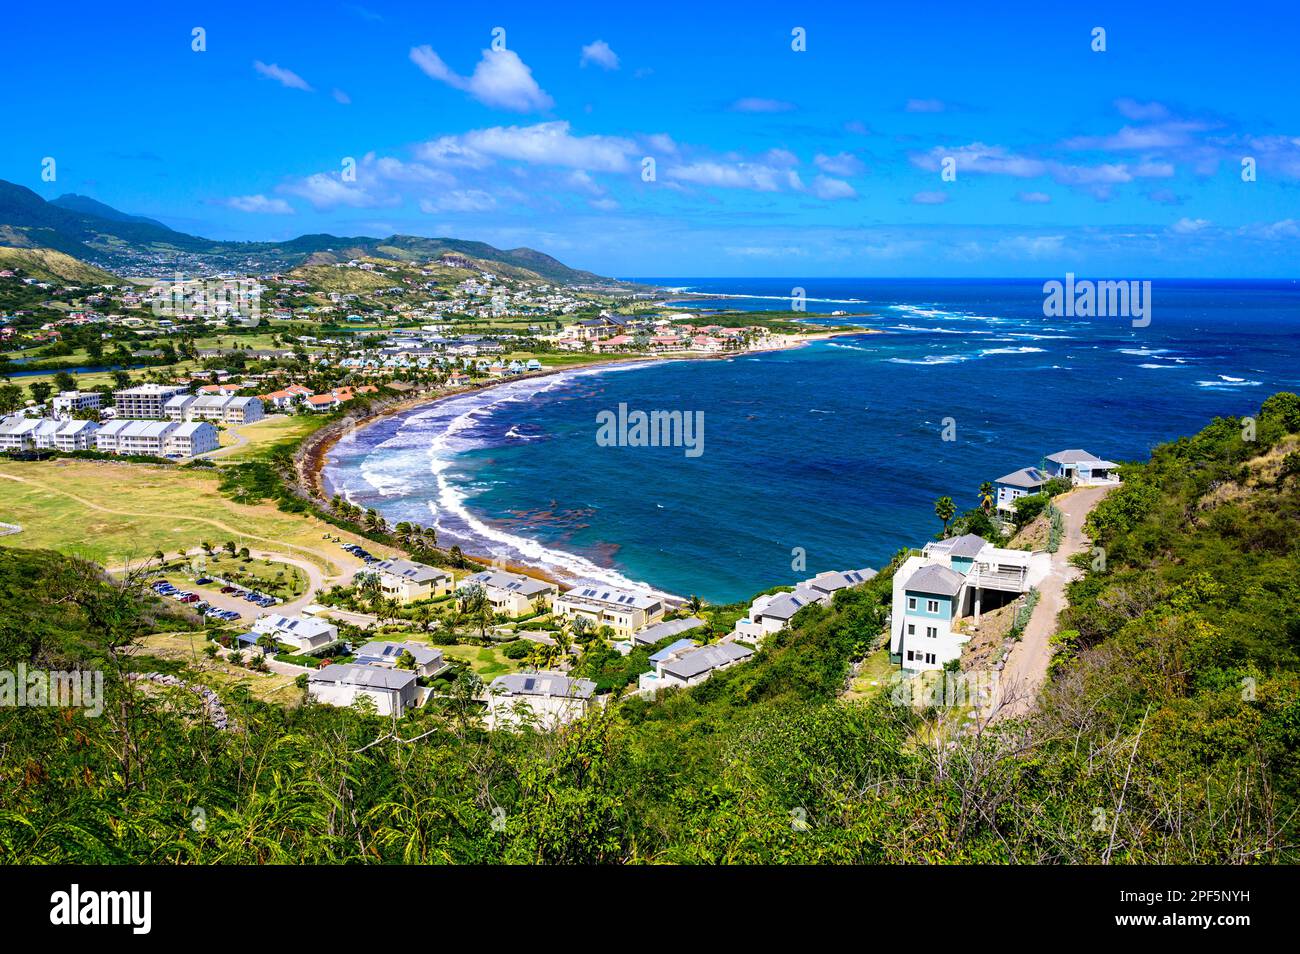 St Kitts e Nevis, Mar dei Caraibi Foto Stock